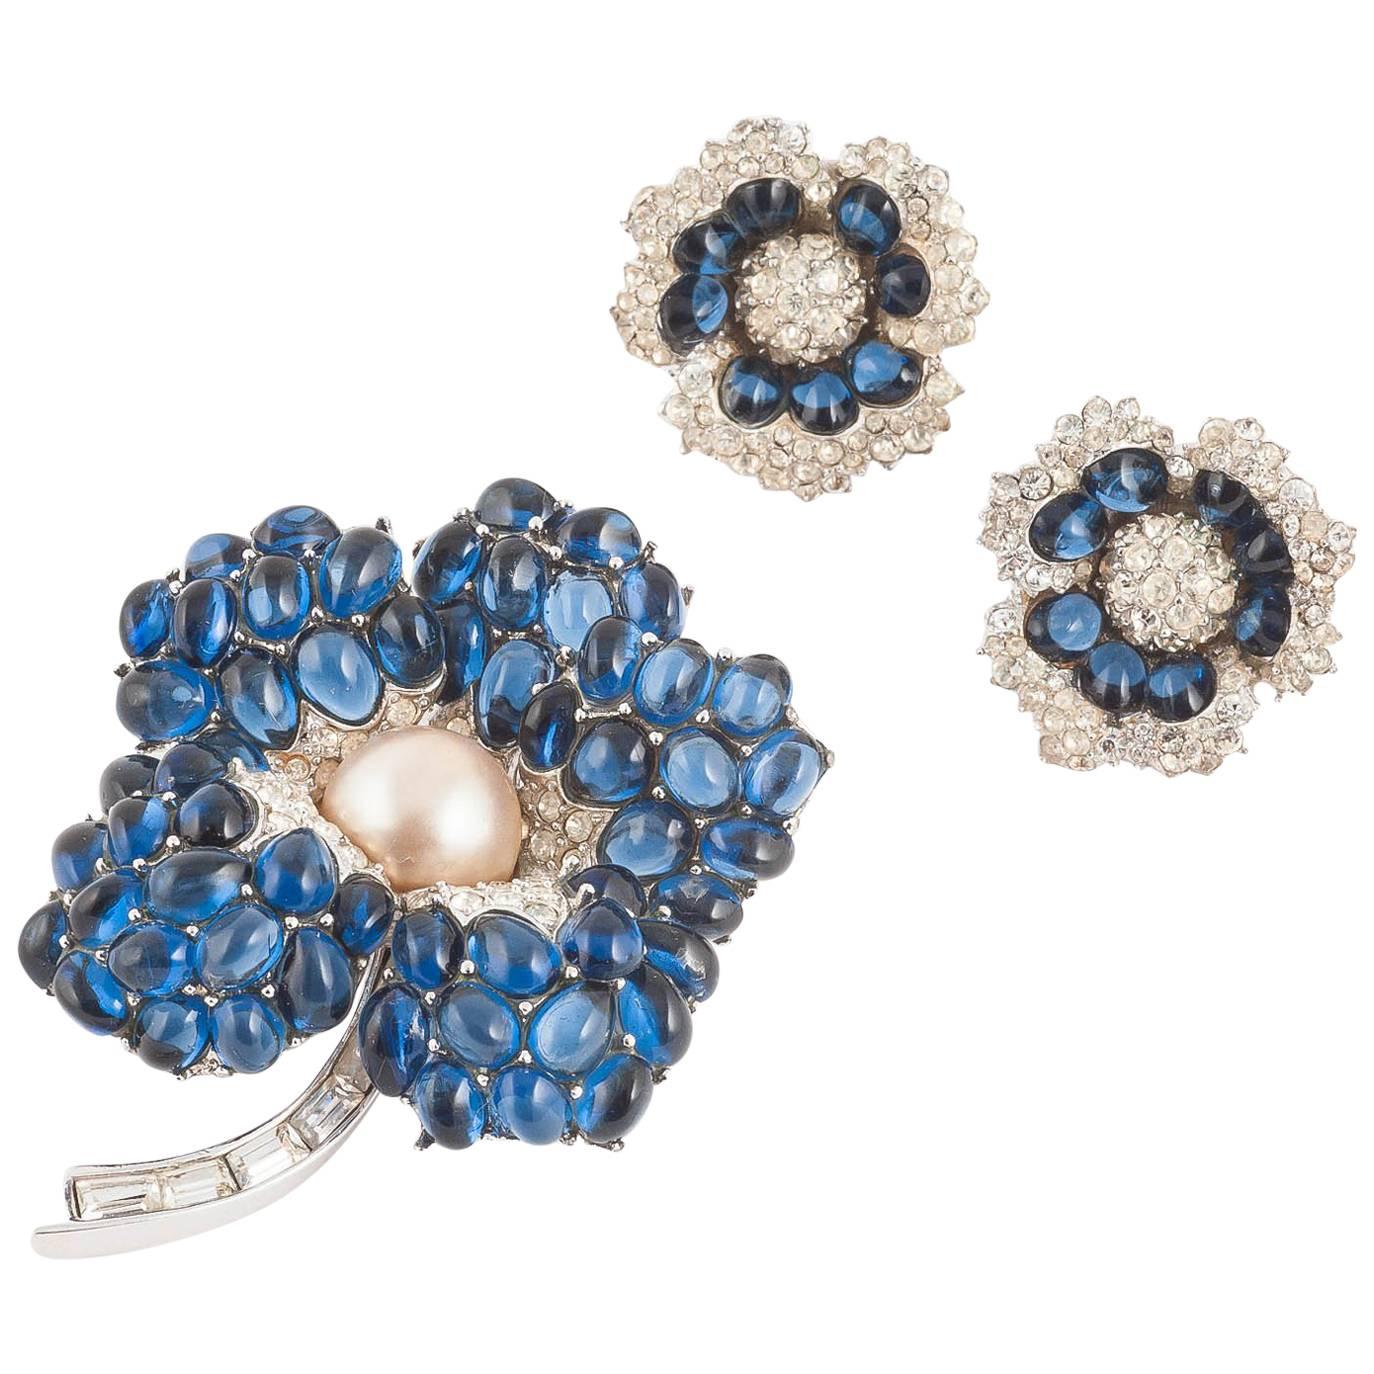 Elegant Marcel Boucher 'flower' brooch and matching earrings.